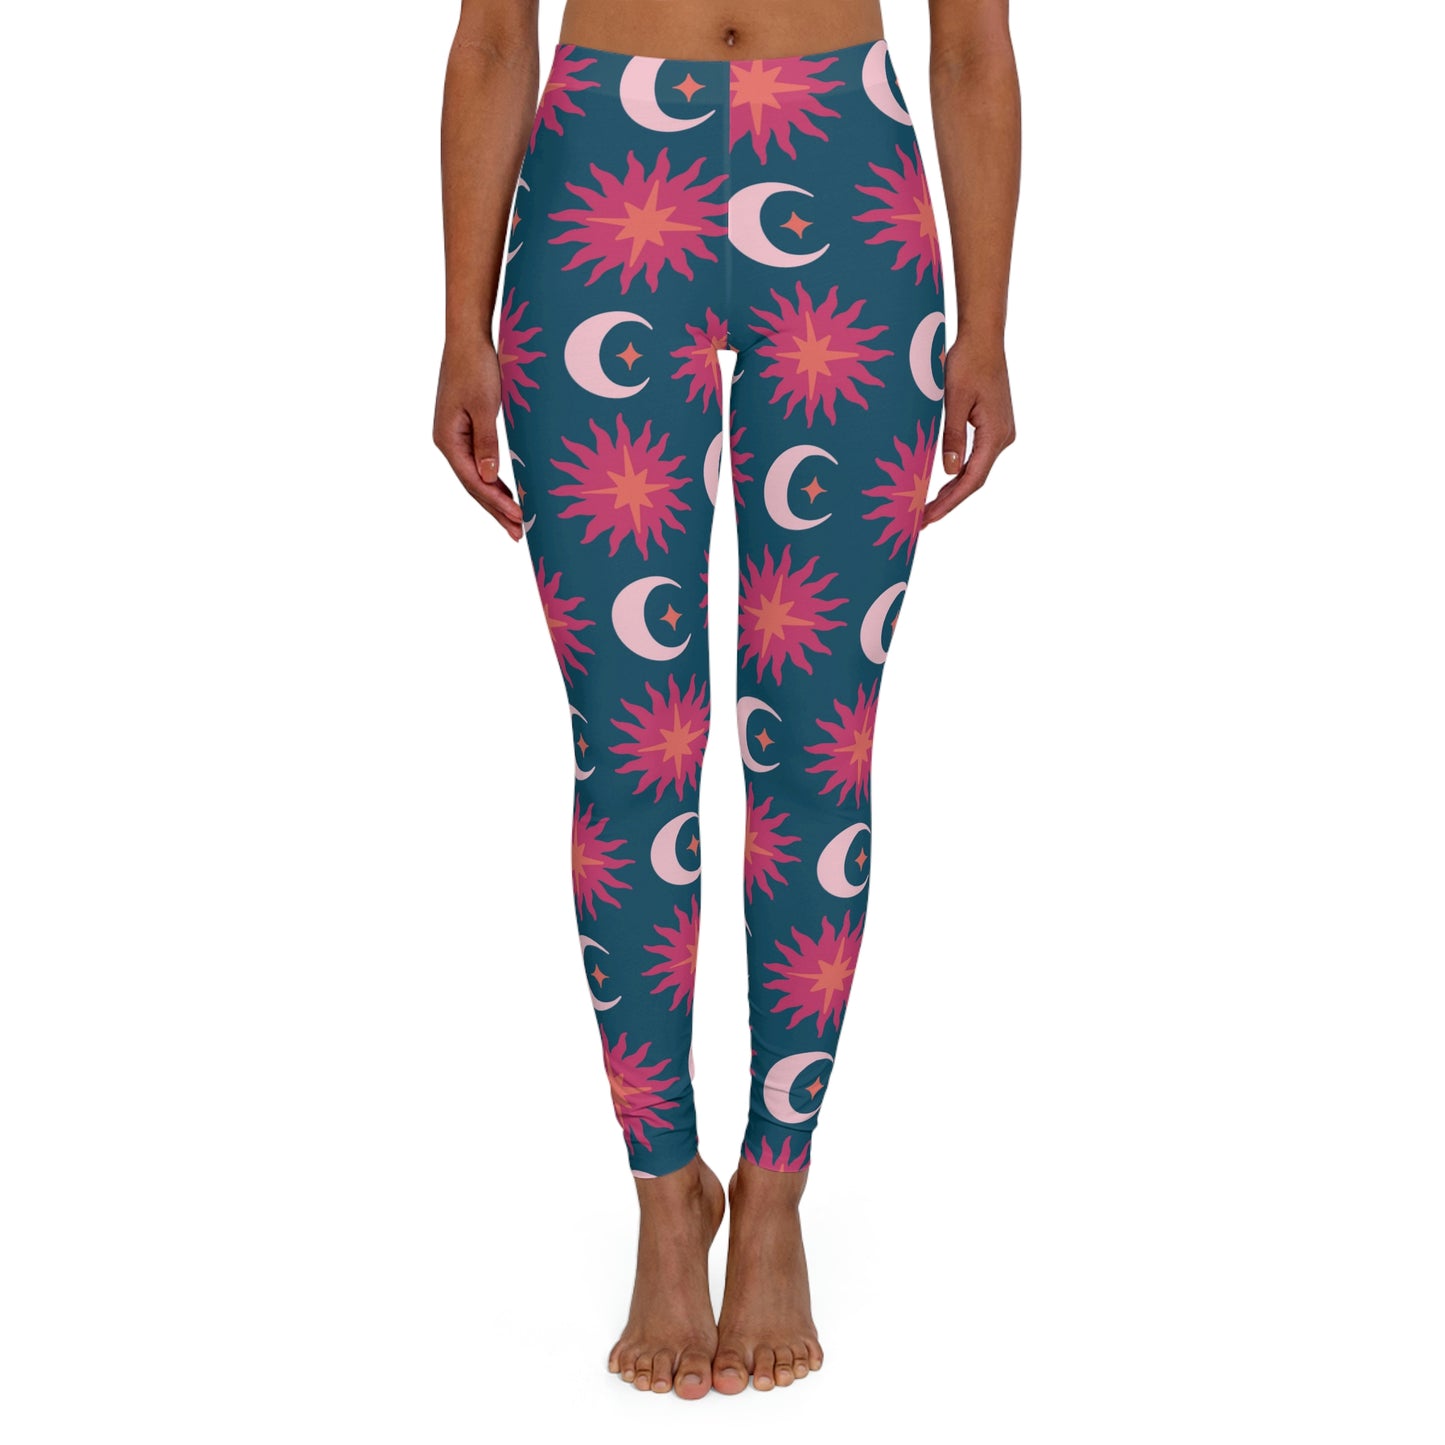 Samantha Foley Moon & Stars Yoga Pants - Teal